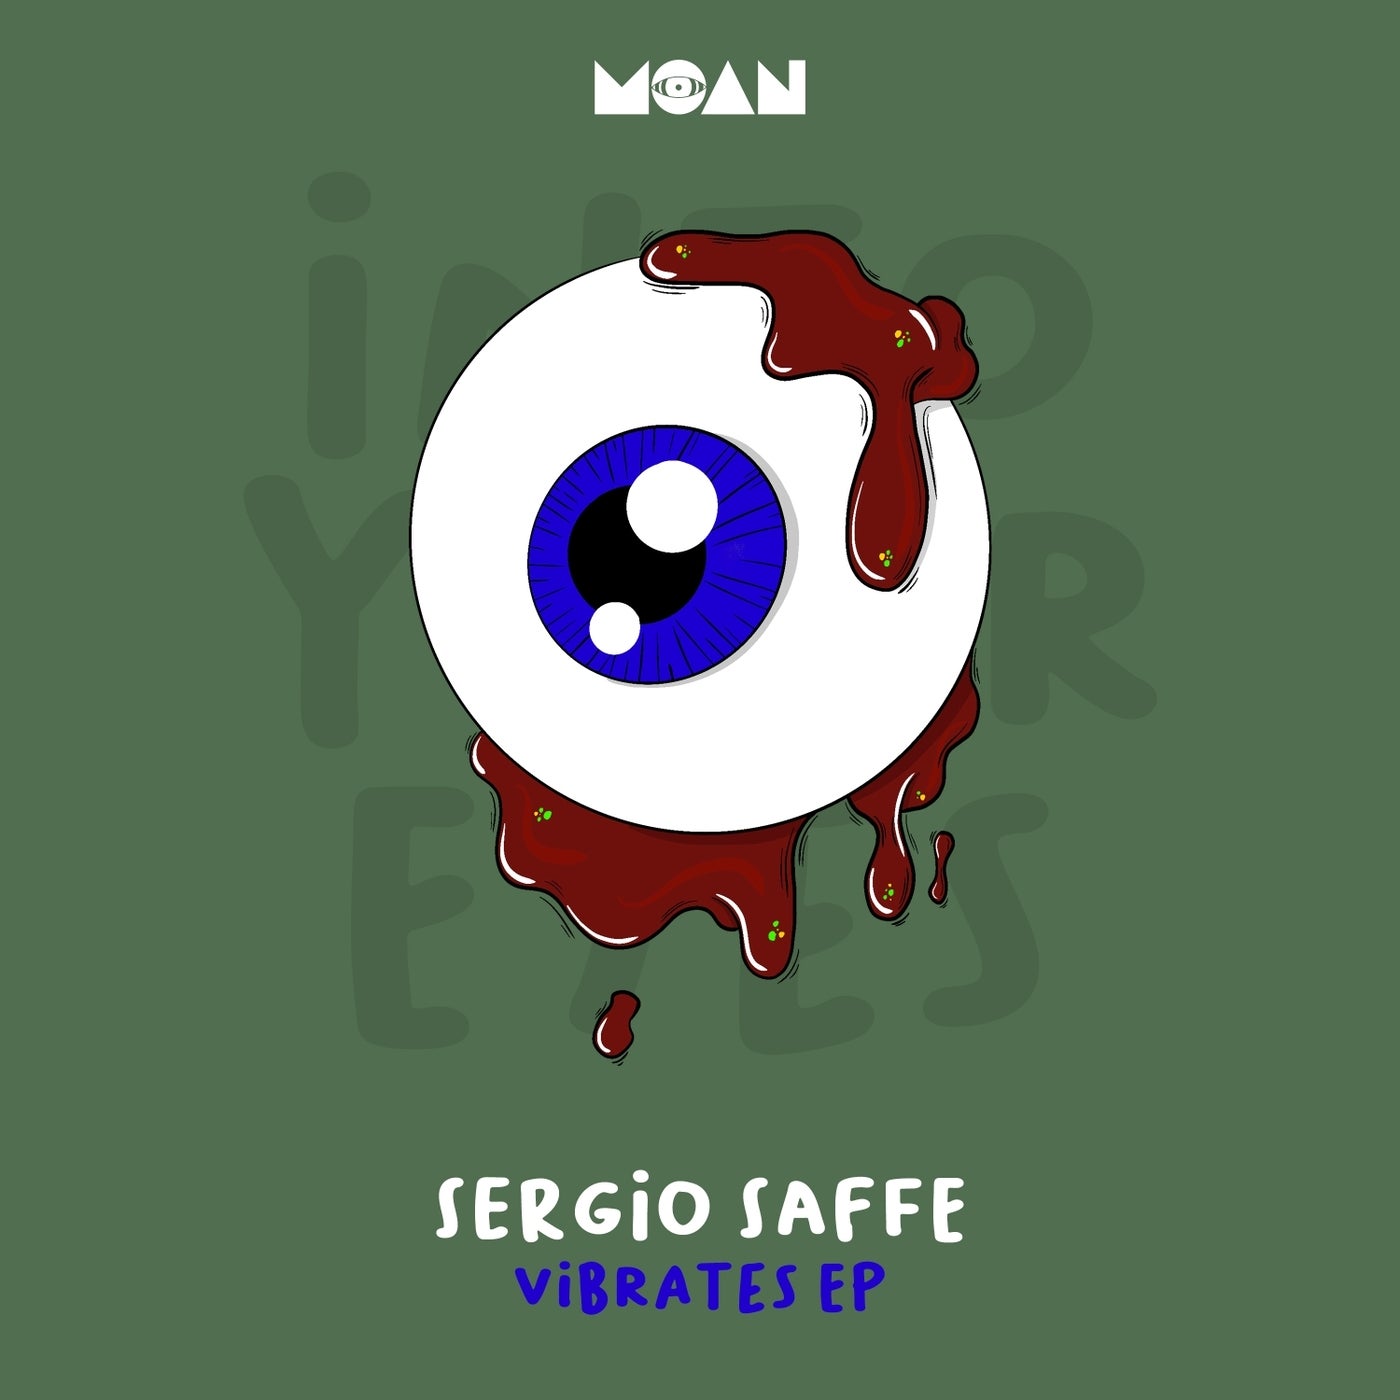 image cover: Sergio Saffe - Vibrates EP on Moan